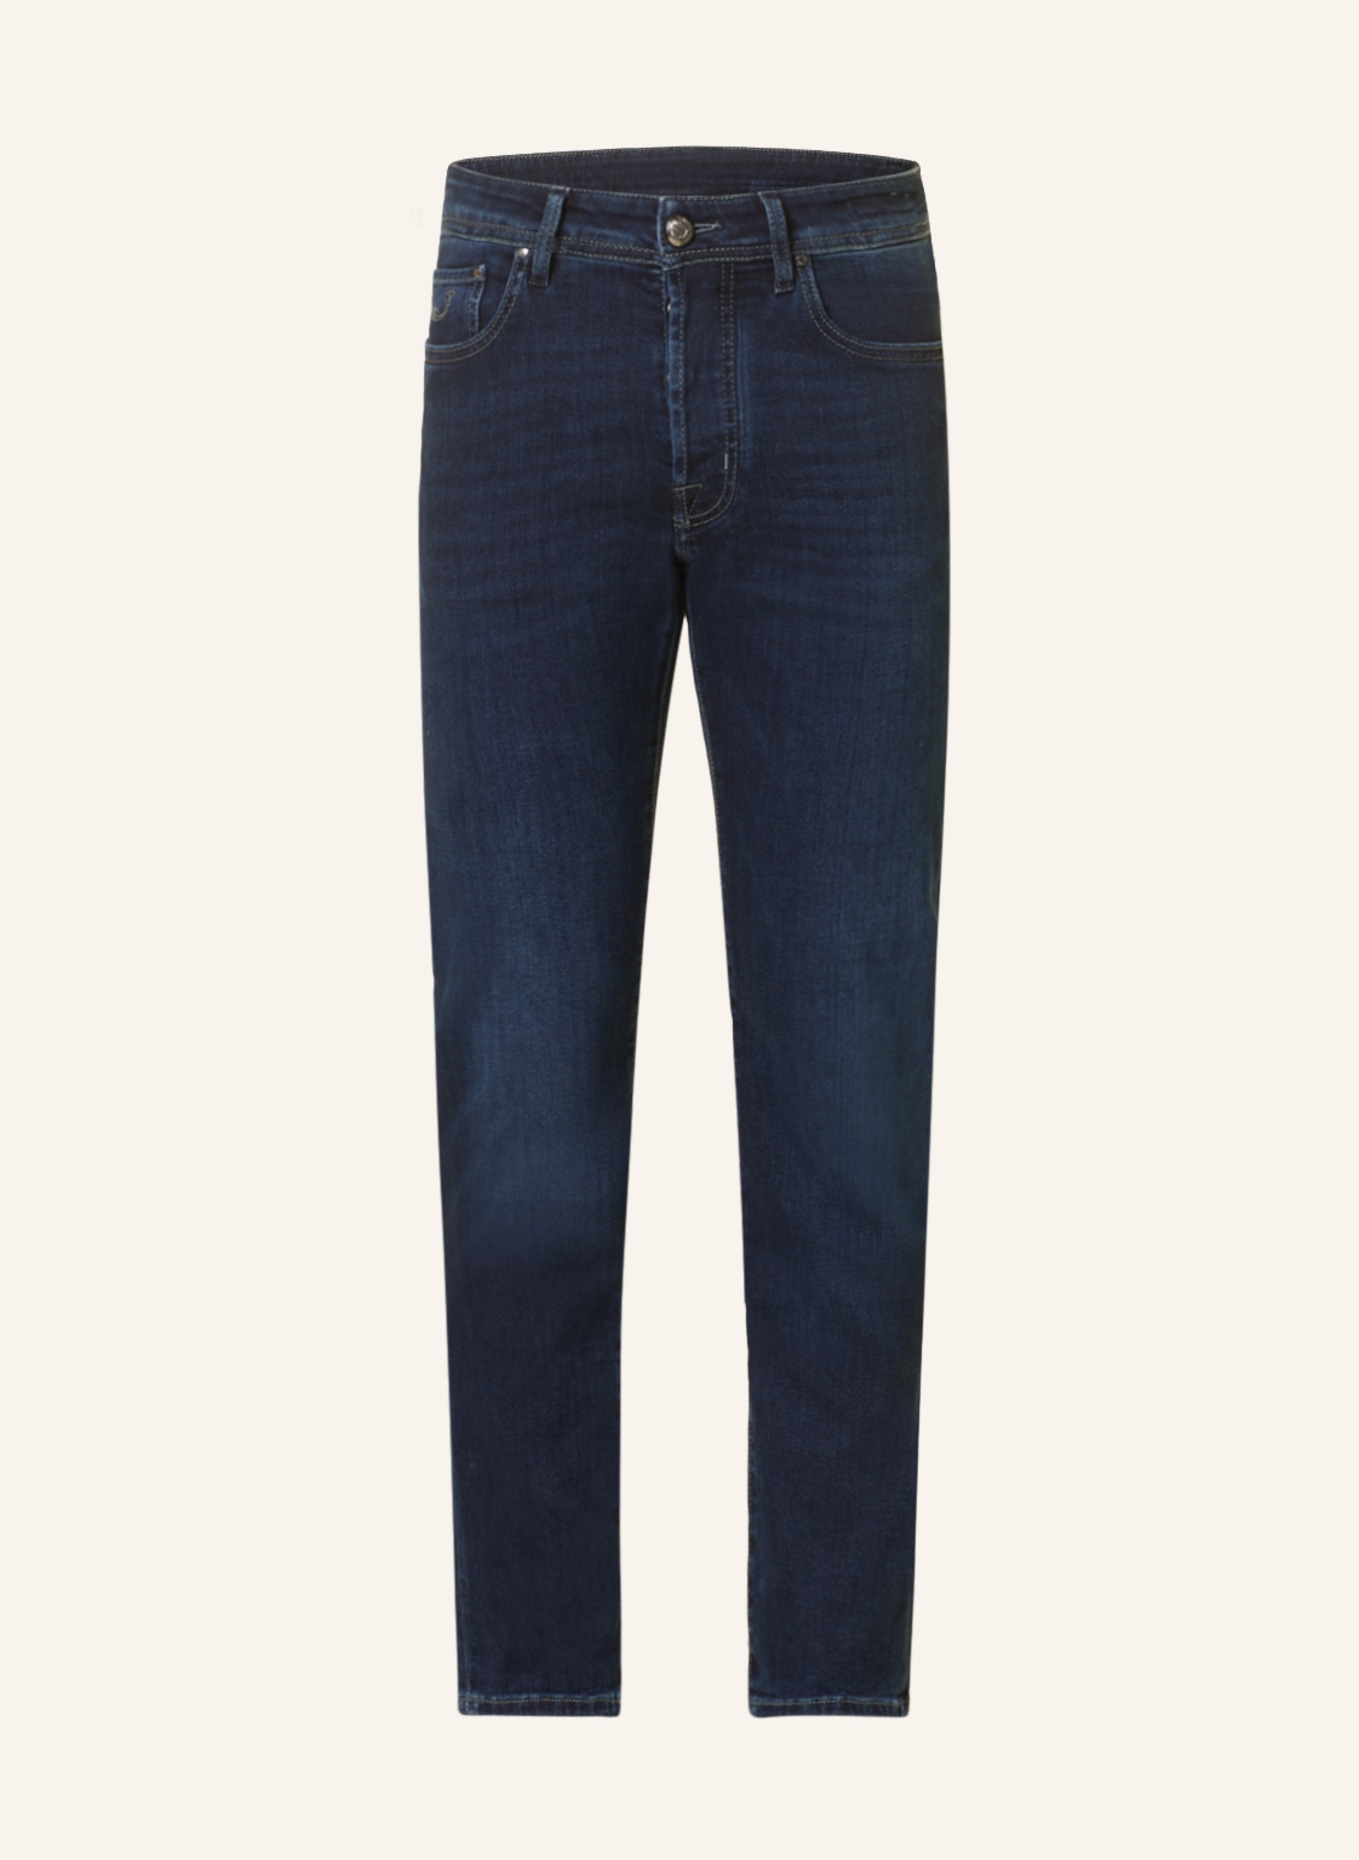 JACOB COHEN Jeans BARD Slim Fit, Farbe: 563D Dark Blue (Bild 1)